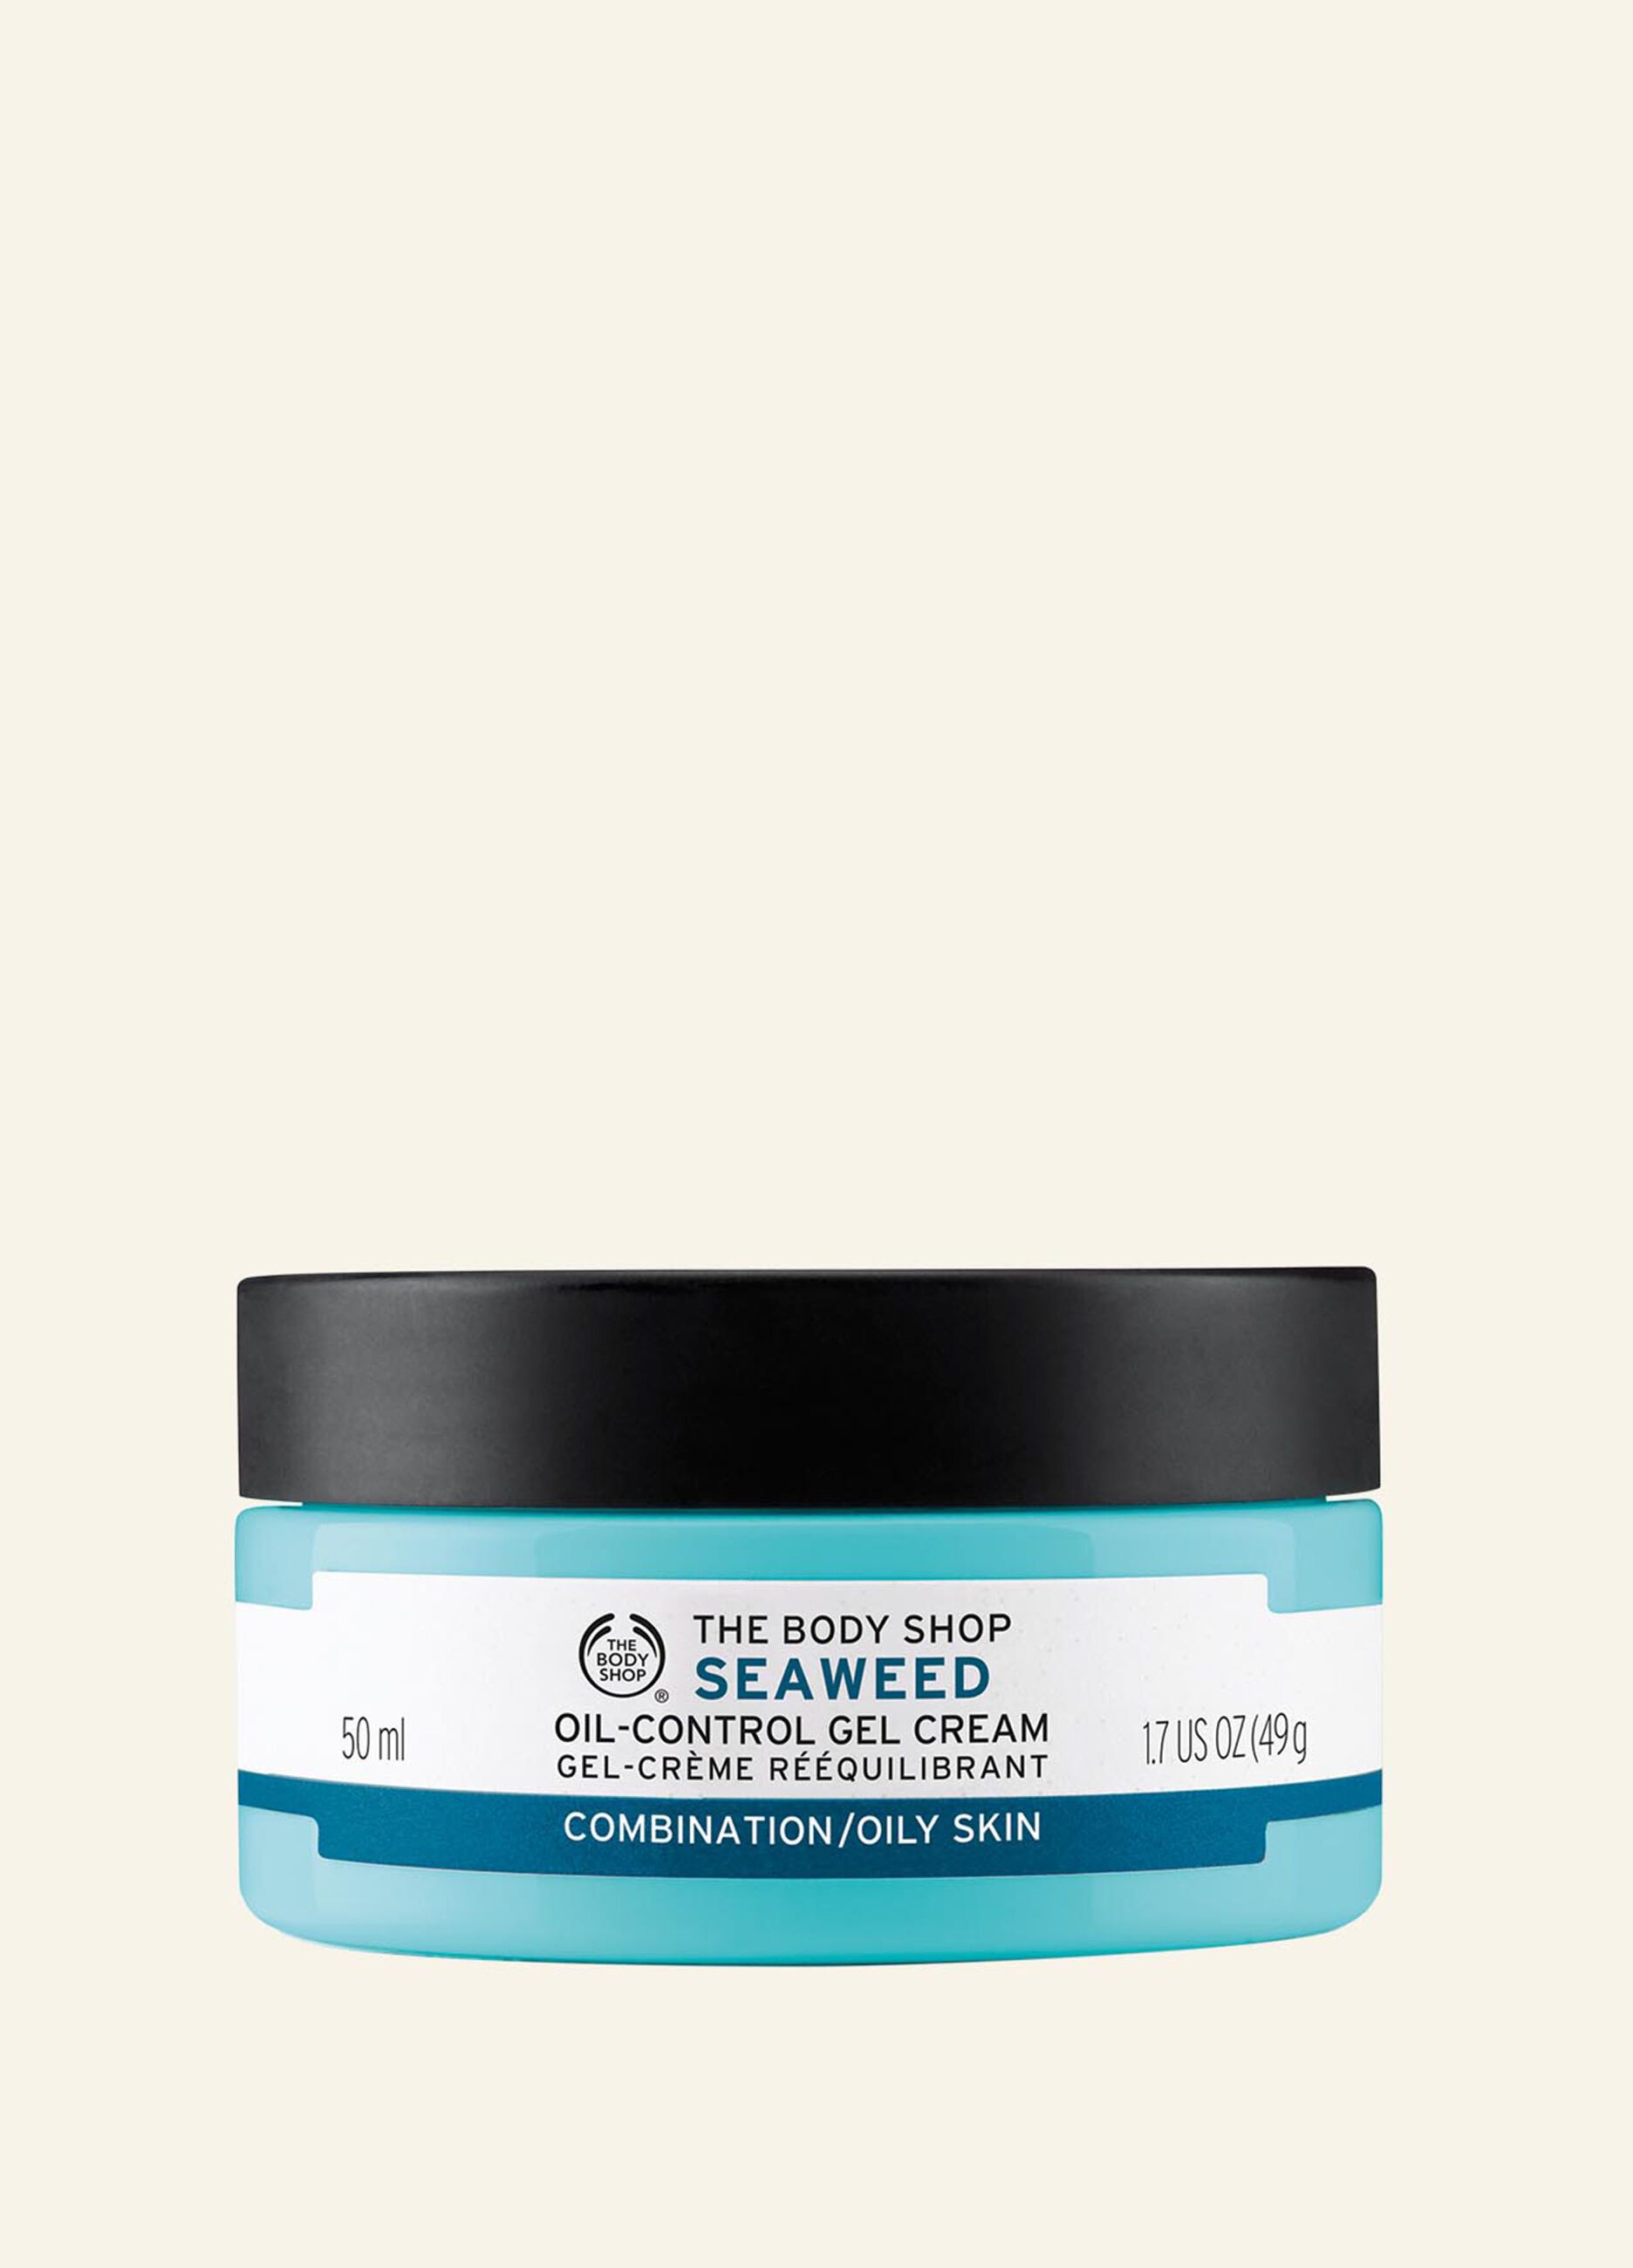 The Body Shop oil-control gel cream with seaweed 50ml